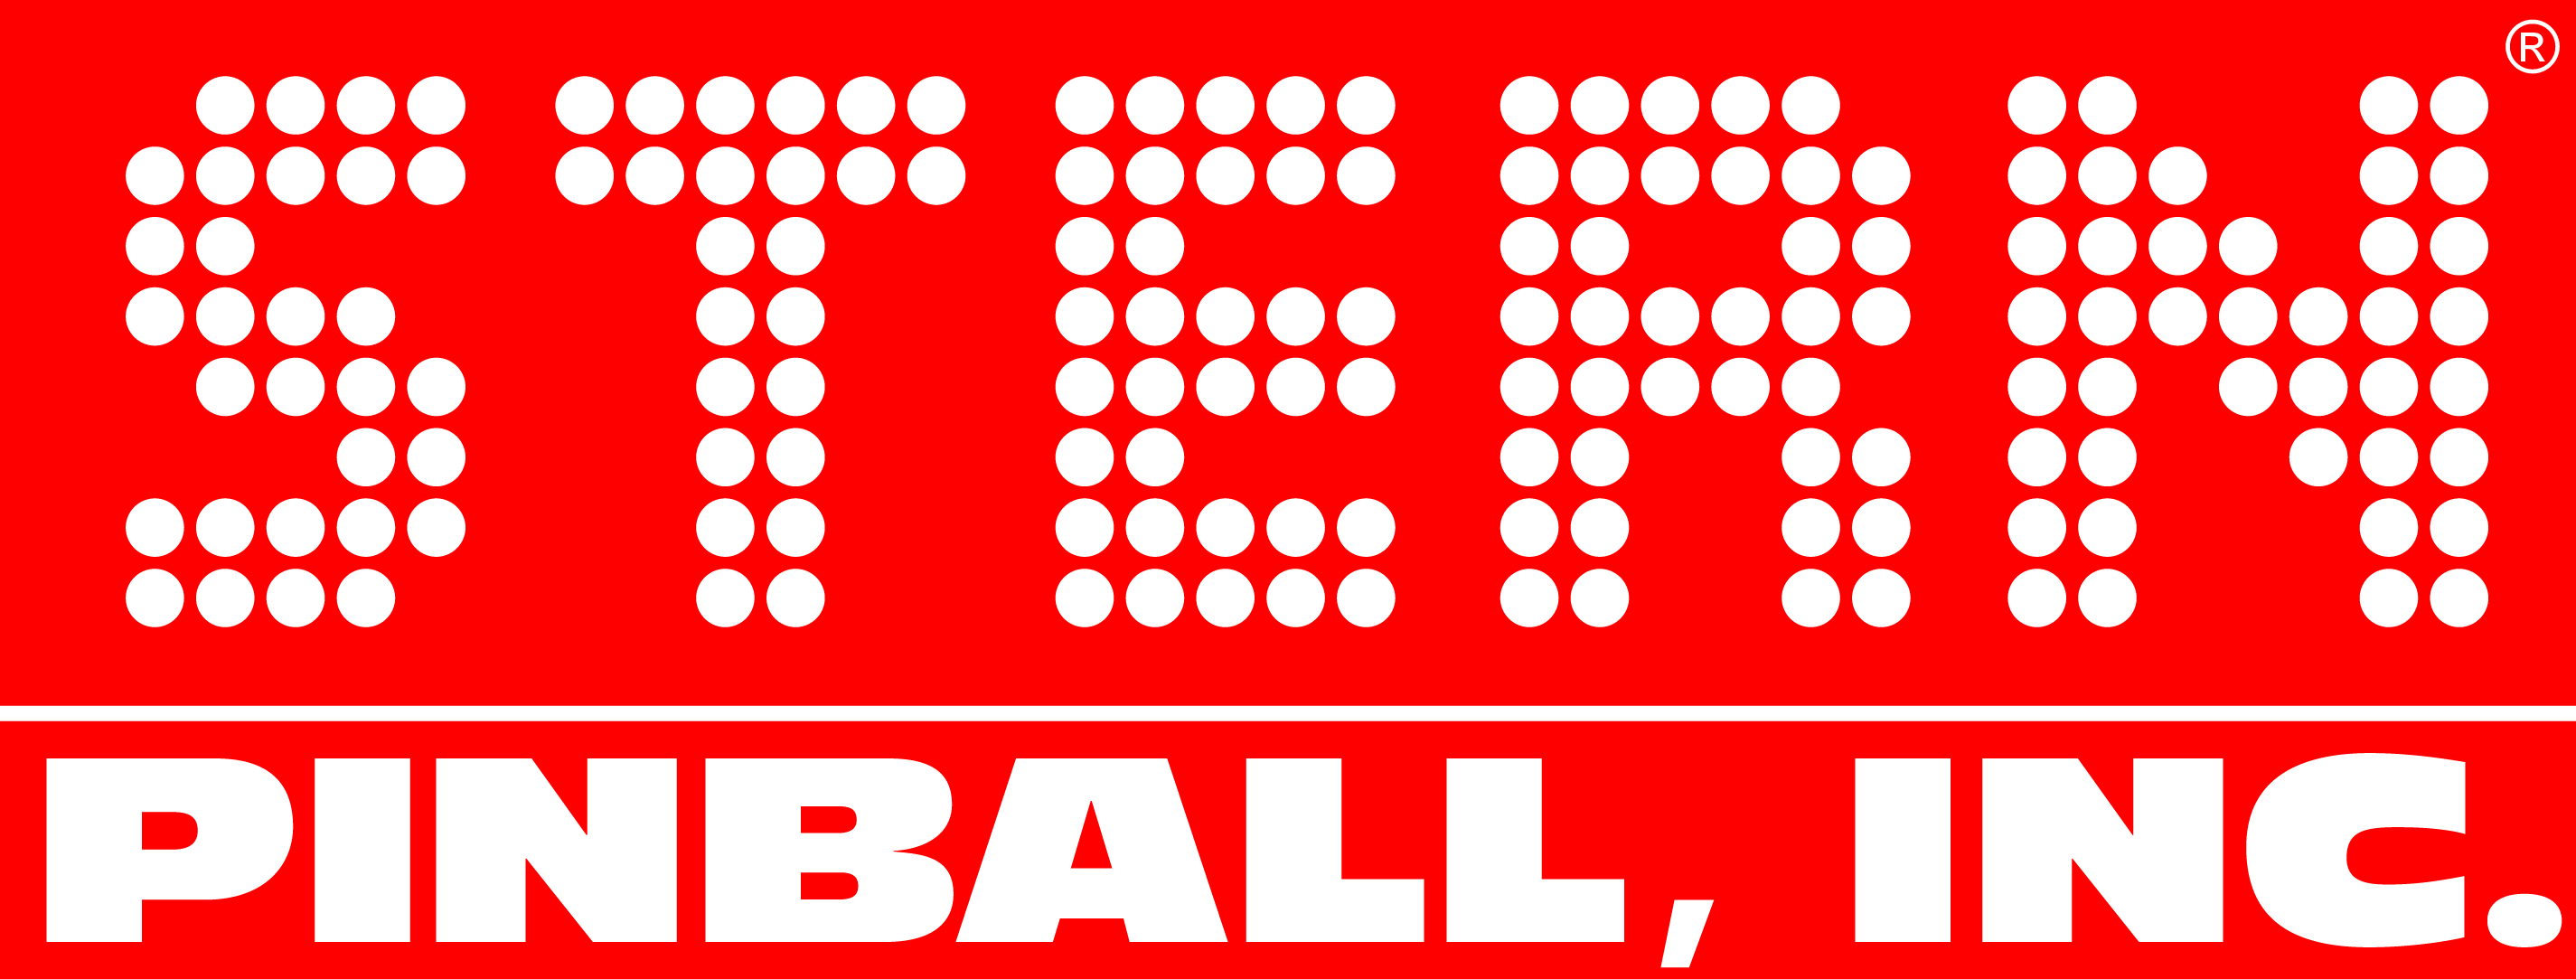 Pinball Logo - New Stern, old Gottlieb, and old Taito company logos